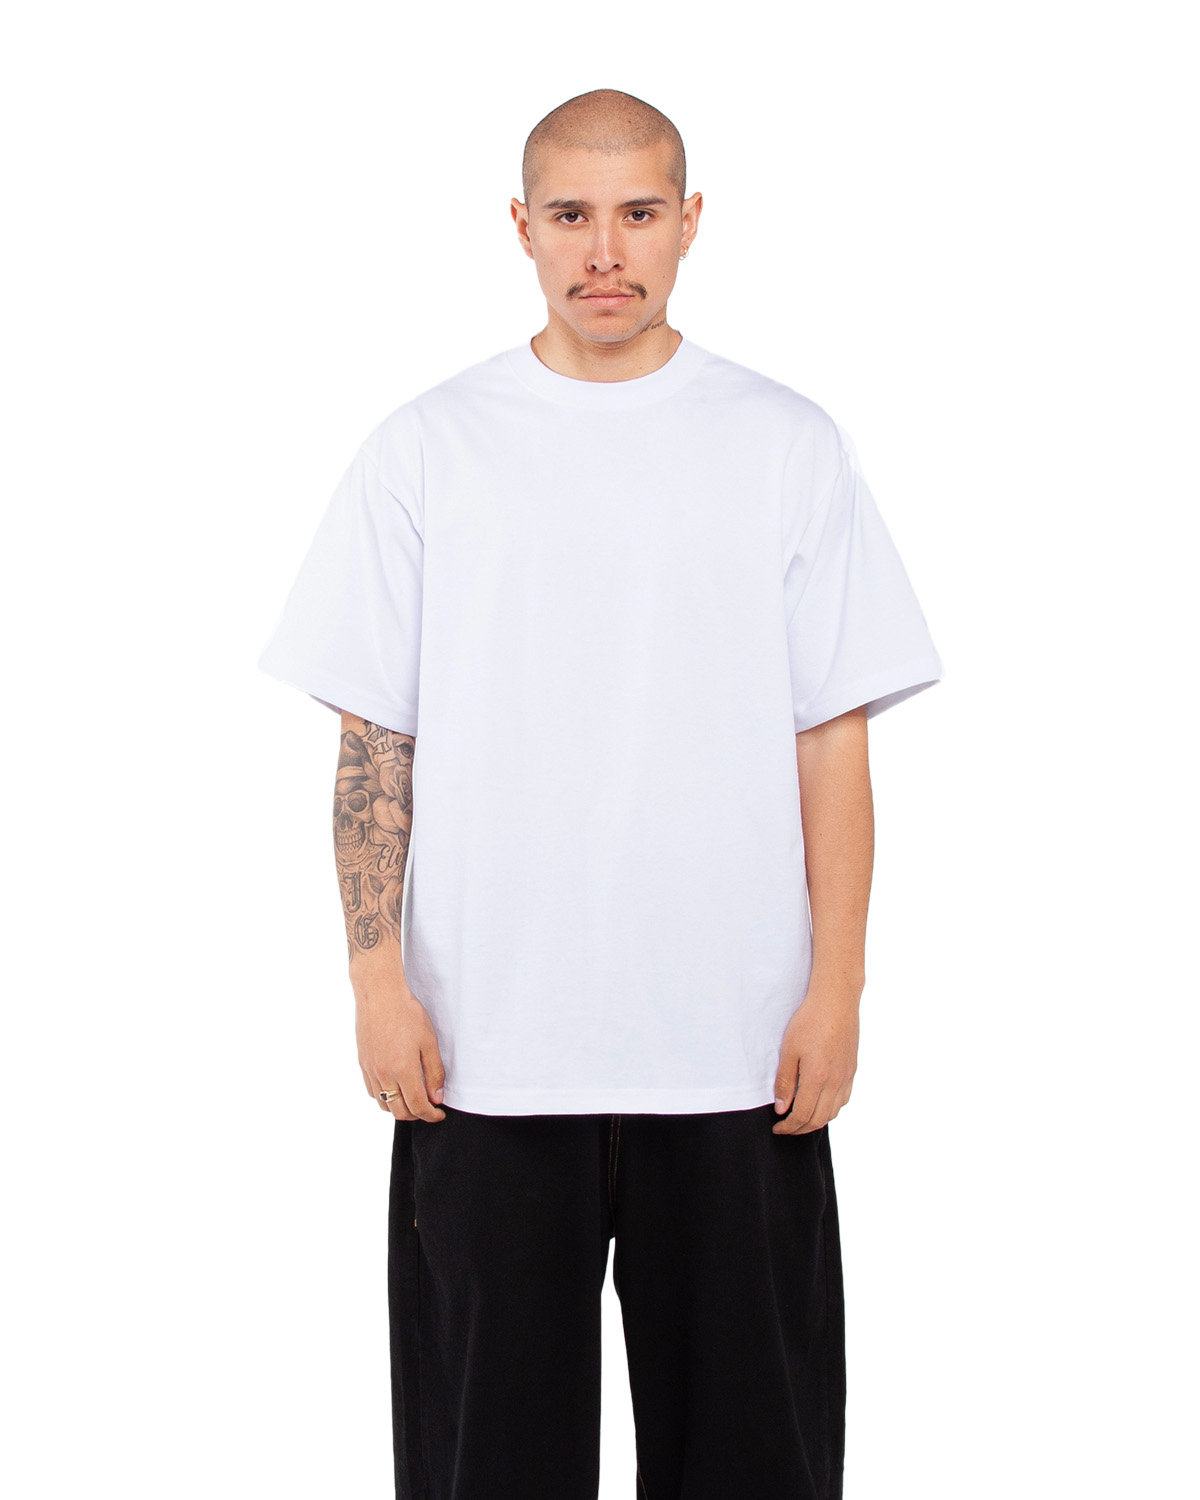 Shaka Wear Drop Ship Tall 7.5 oz., Max Heavyweight Short-Sleeve T-Shirt WHITE 